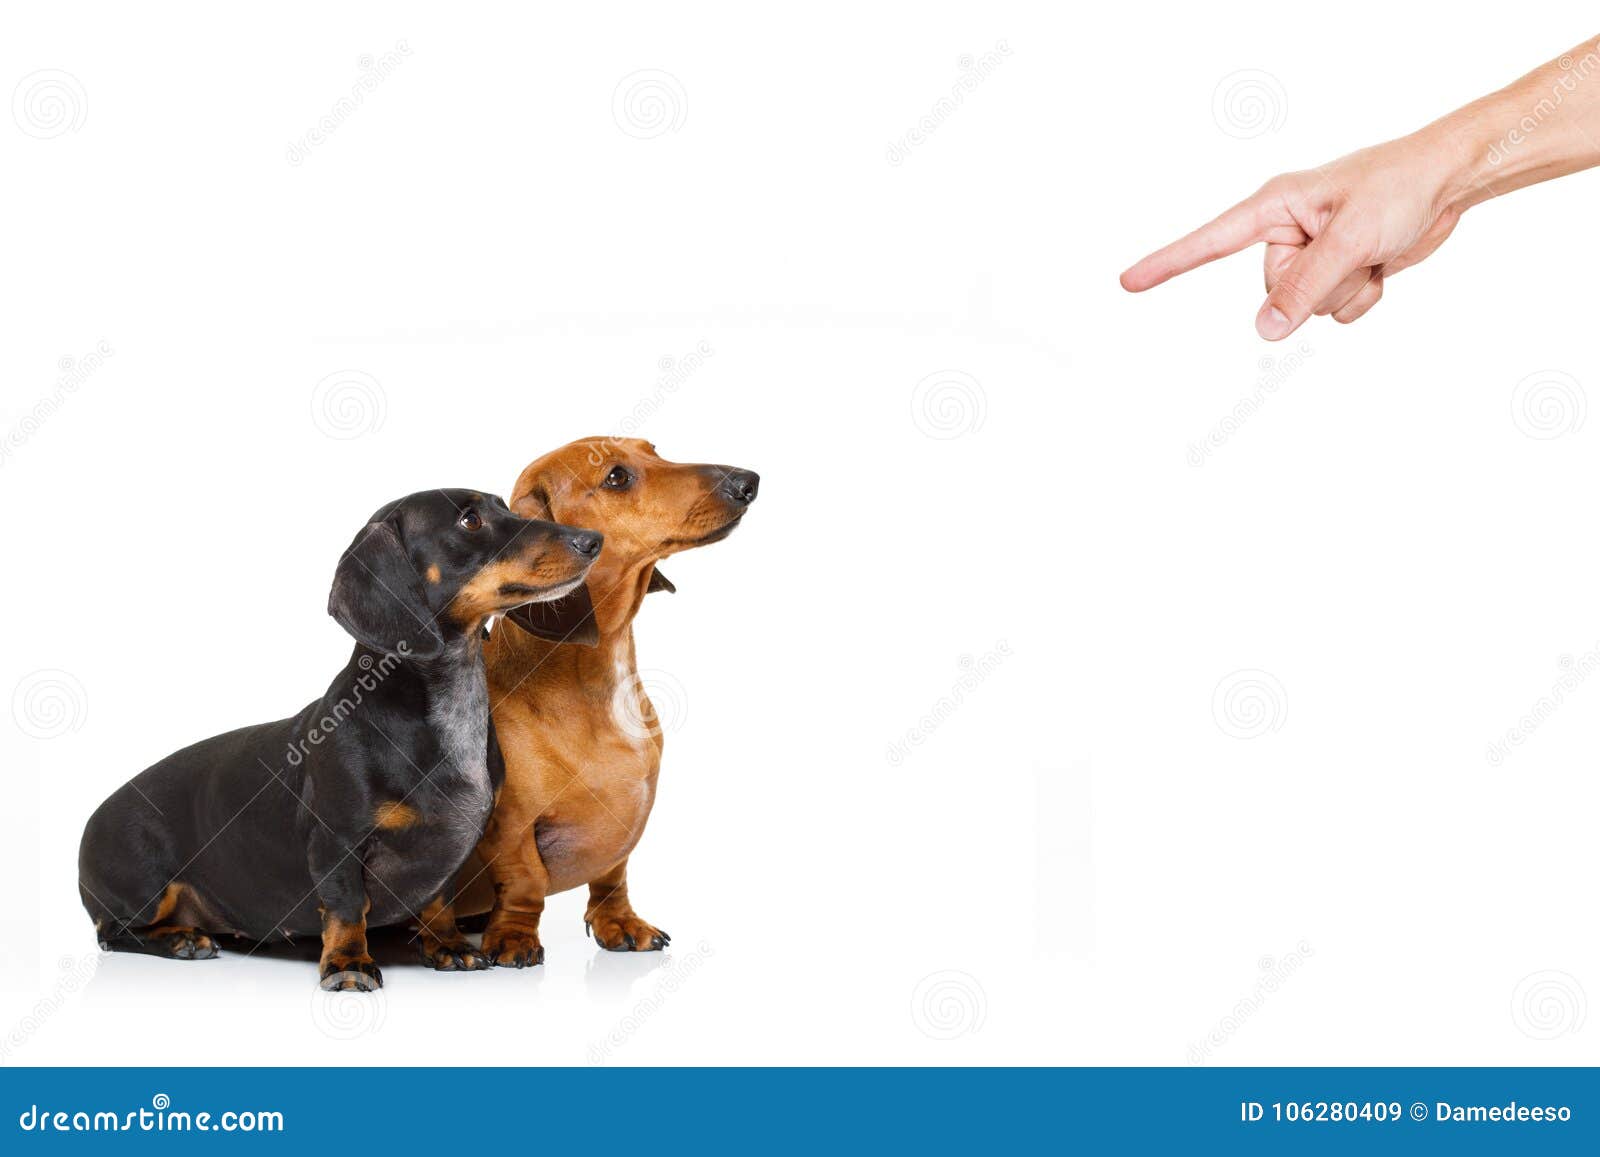 dachshund pointing